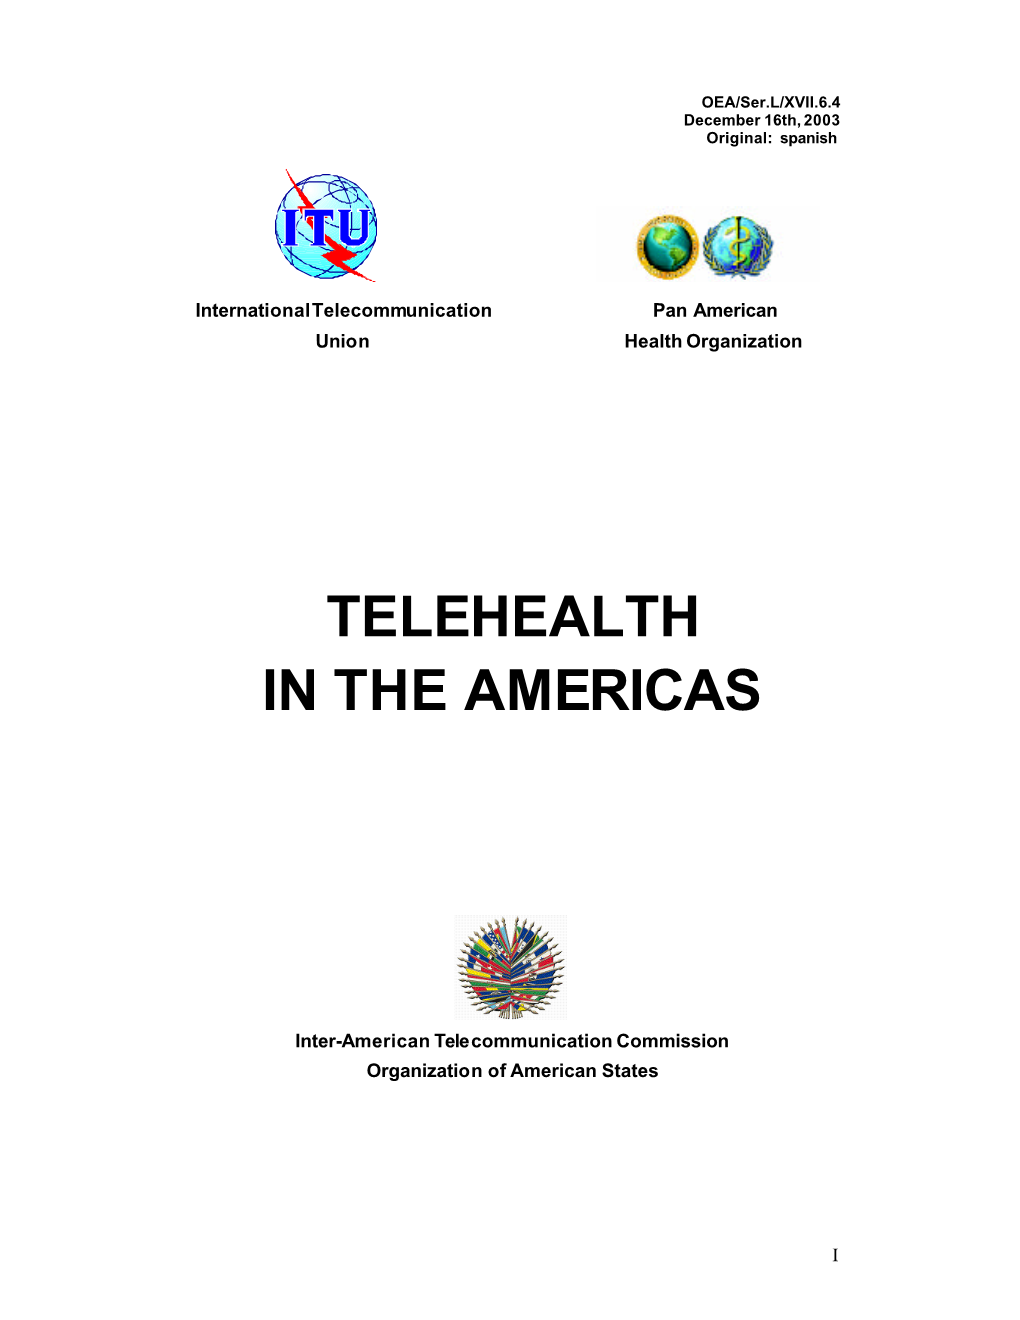 Telehealth in the Americas